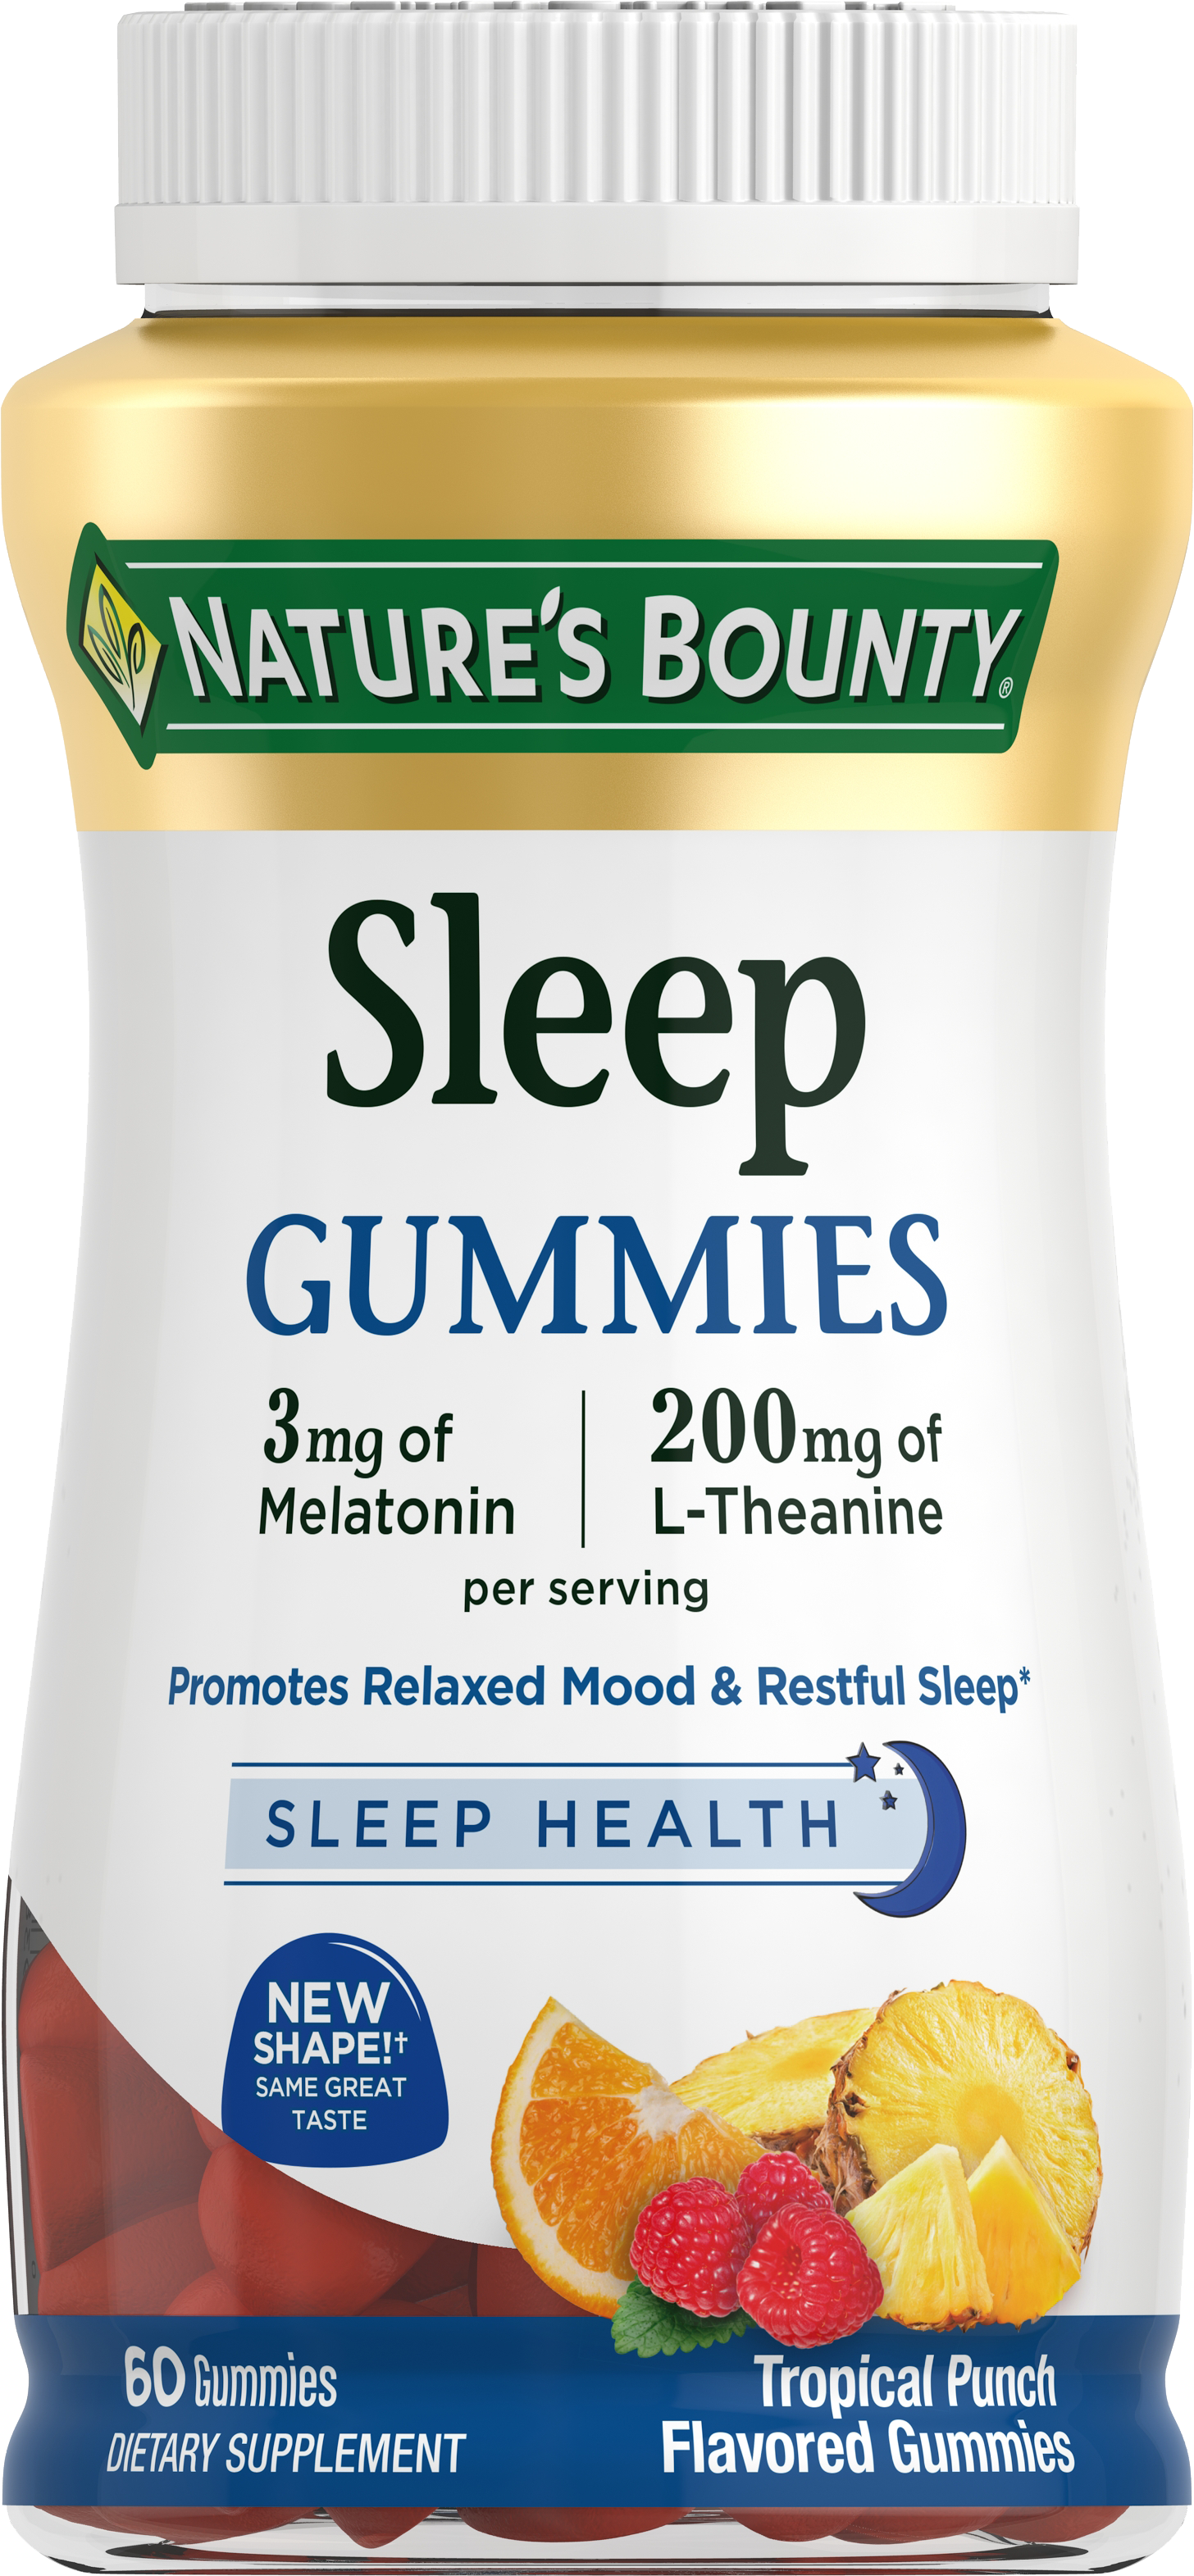 Nature’s Bounty Sleep Gummies, Melatonin 3mg, Sleep Support Supplement, Topical Punch, 60 Ct - image 1 of 8